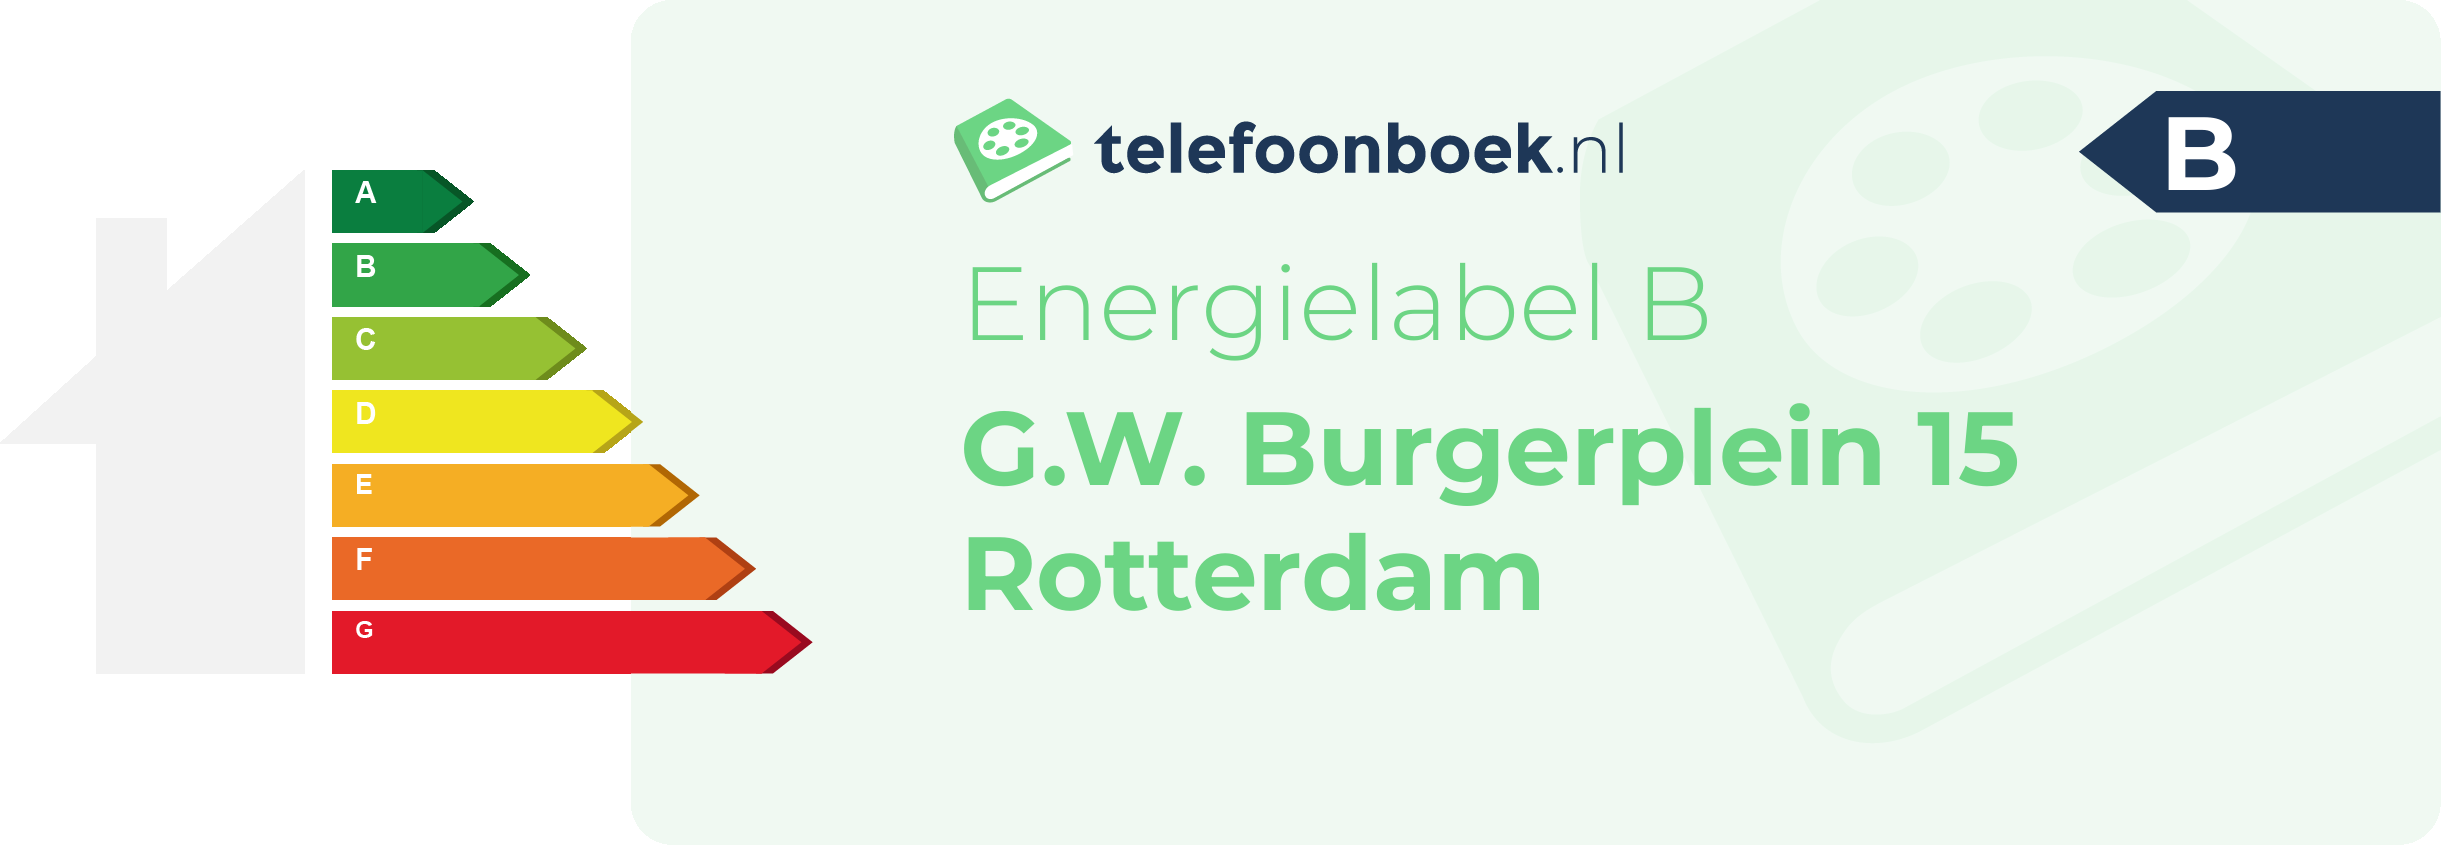 Energielabel G.W. Burgerplein 15 Rotterdam